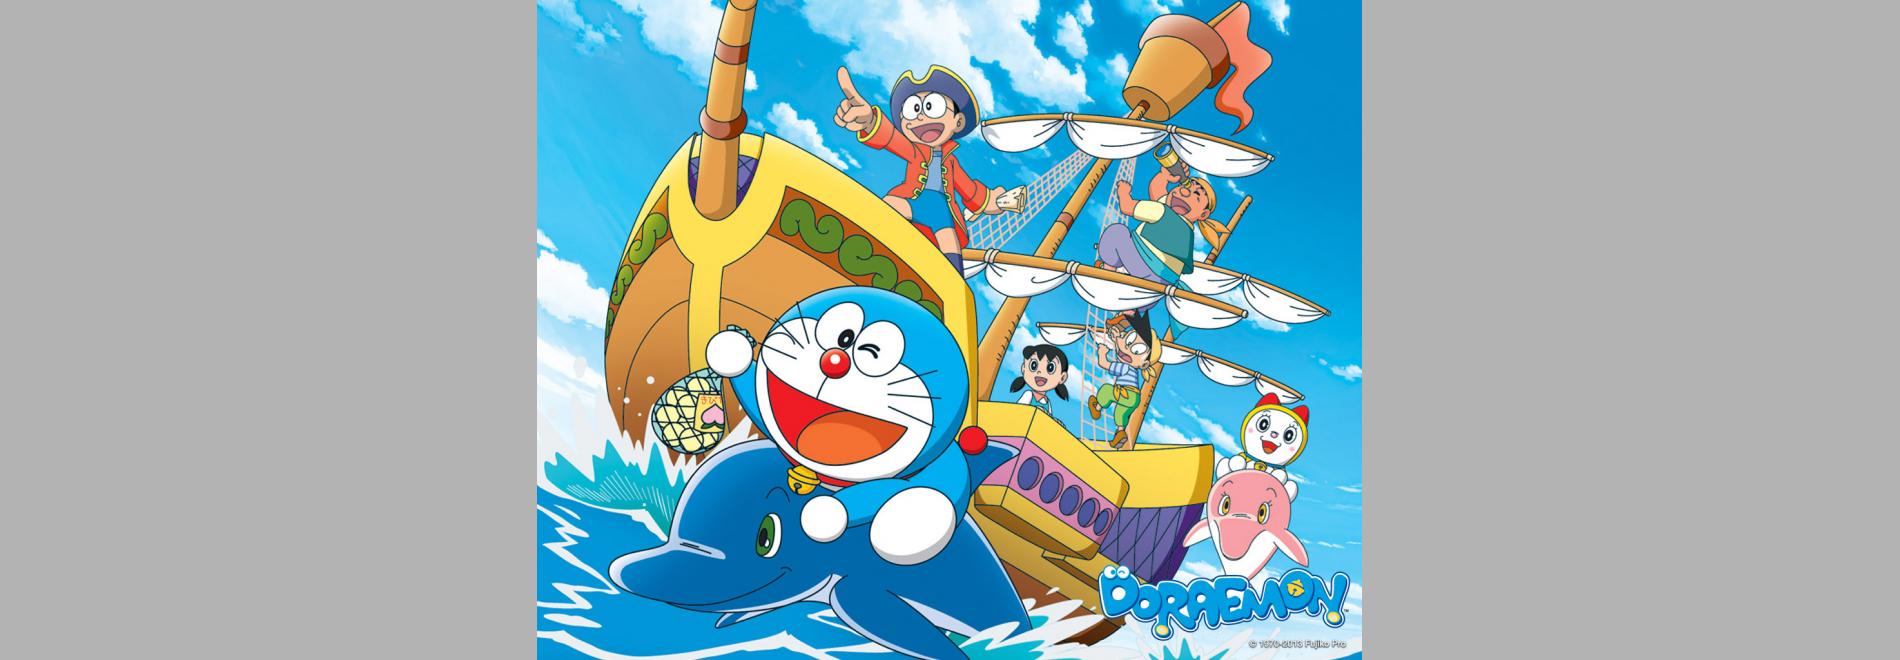 Doraemon: Nobita's Great adventure in the South Sea / En Doraemon i els pirates dels mars del sud (Tsutomu Shibayama, 2002)